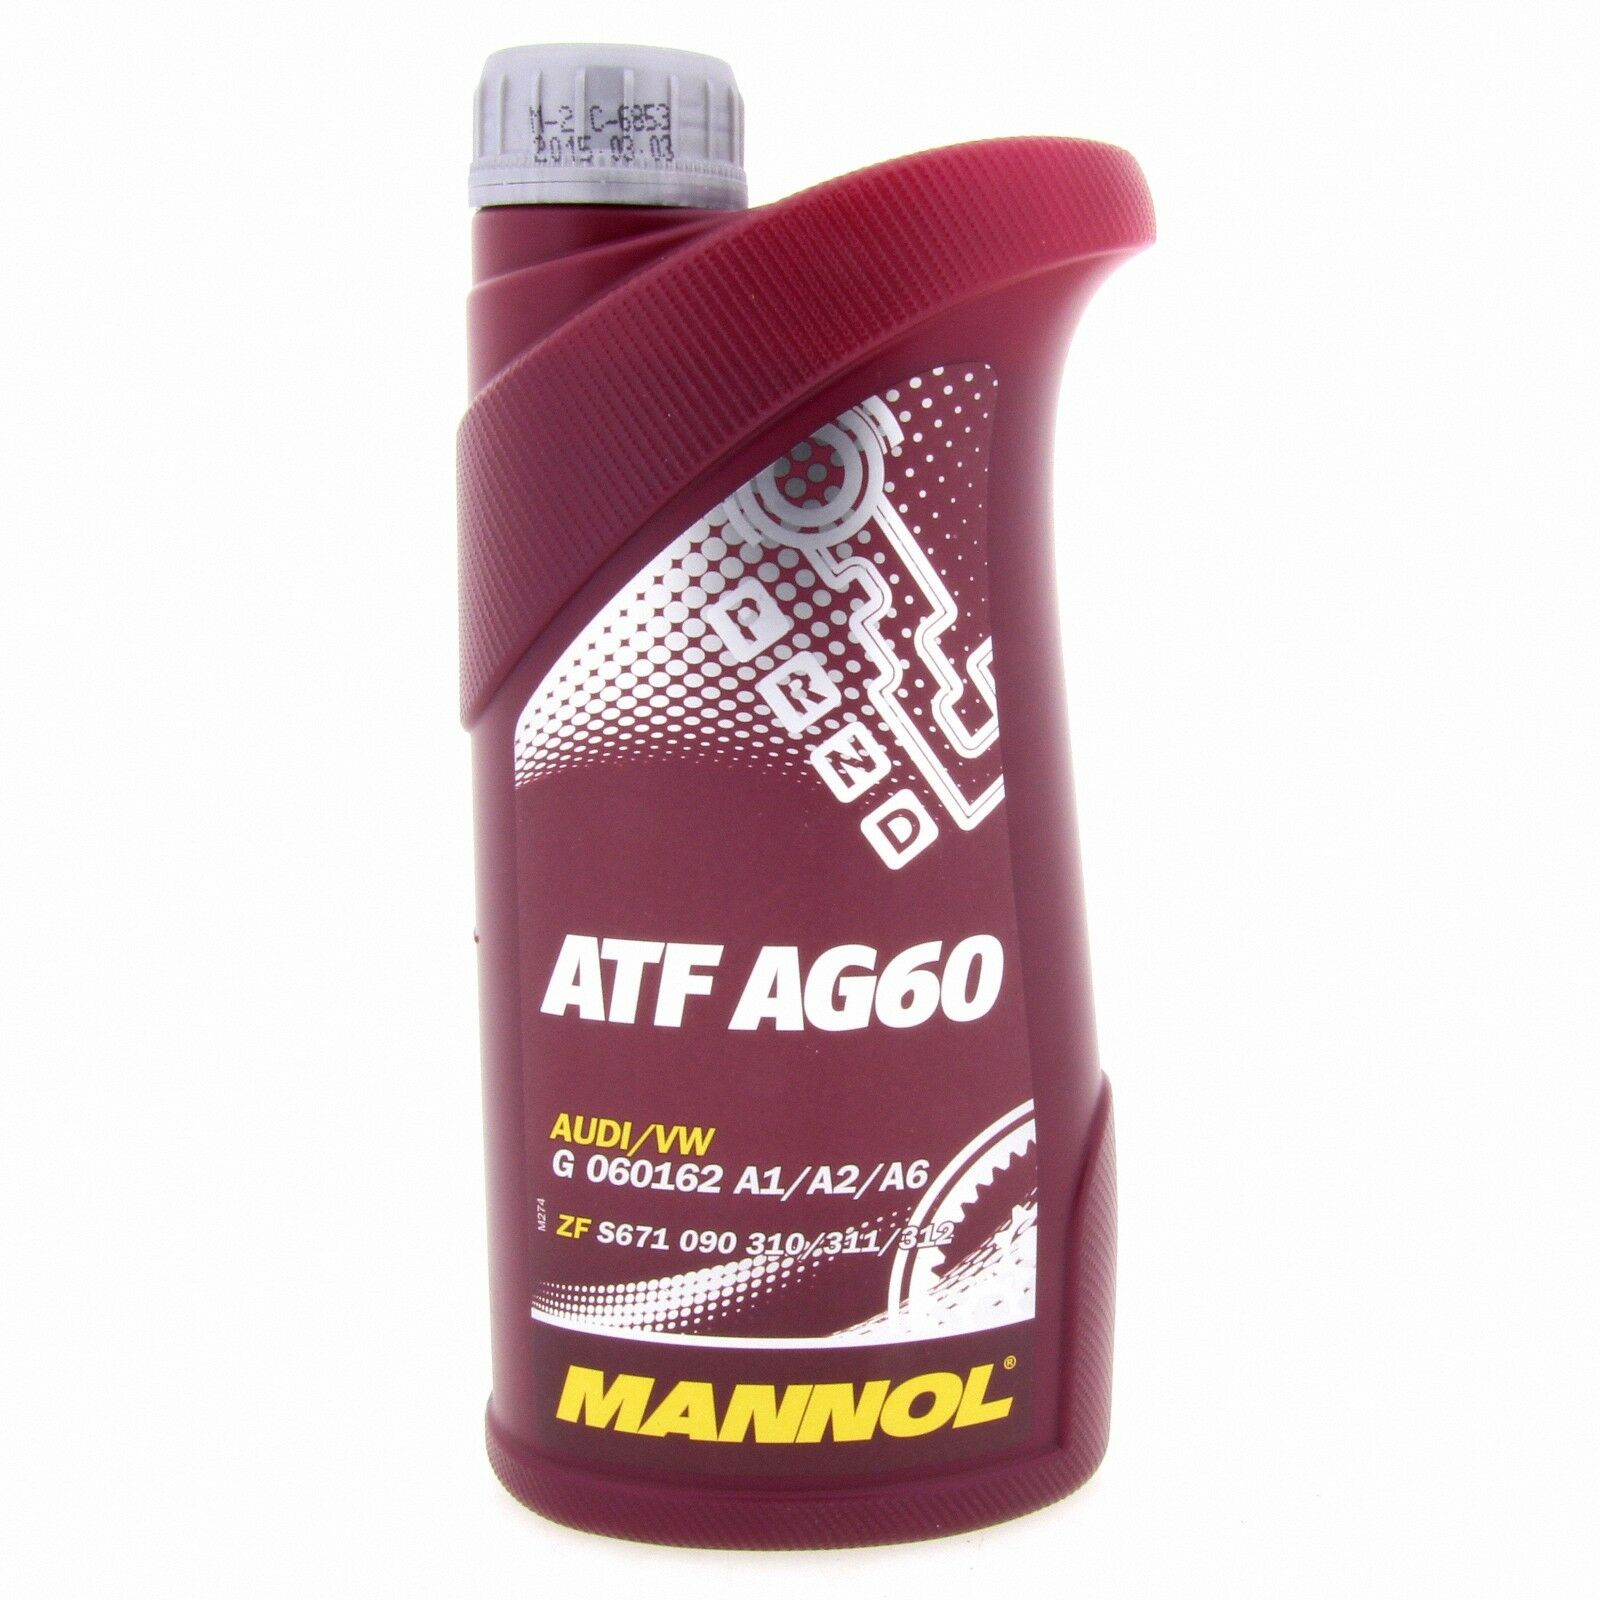 1 Liter MANNOL ATF AG60 Getriebeöl Automatikgetriebe Öl 4036021103044